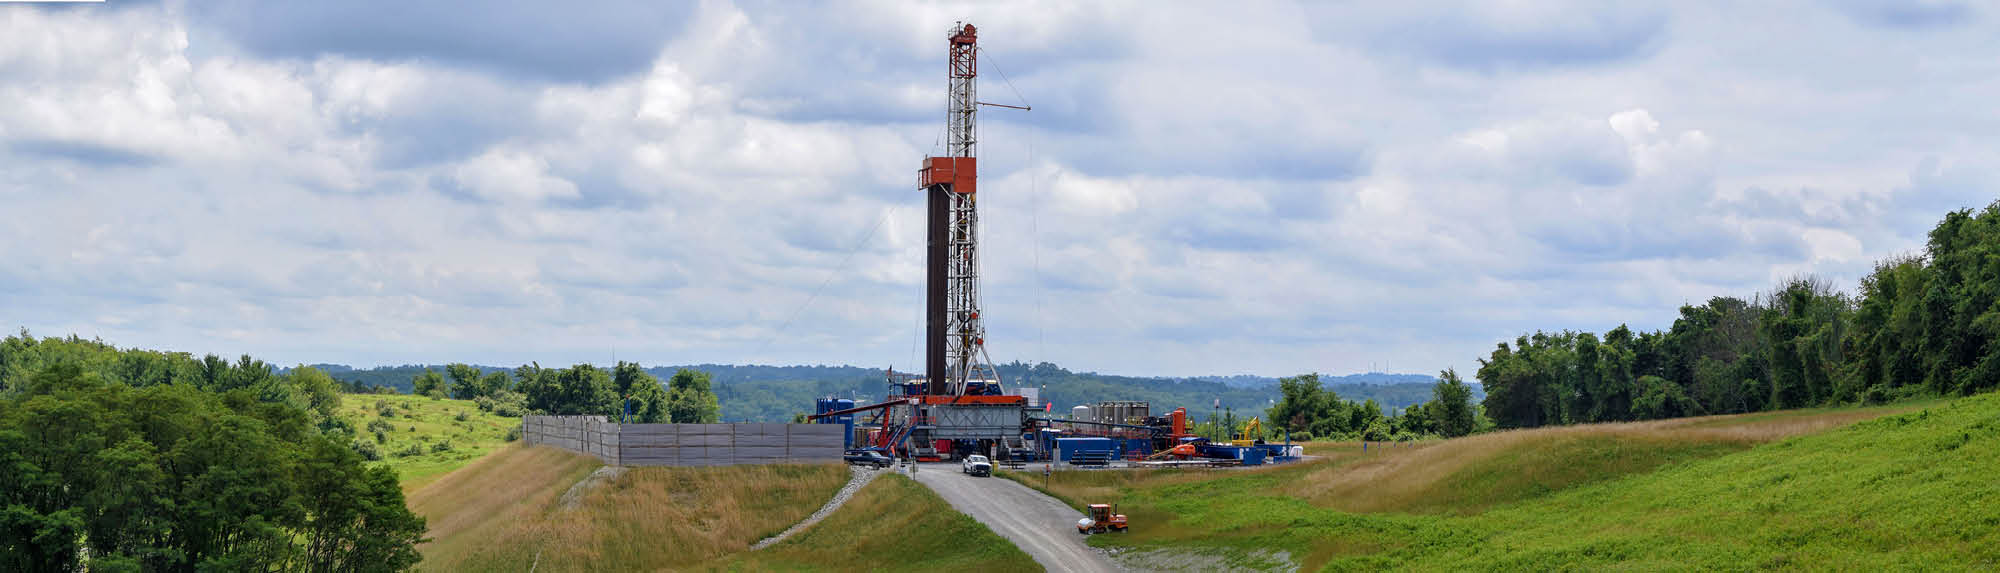 Fracking drilling rig in Washington County, Pennsylvania